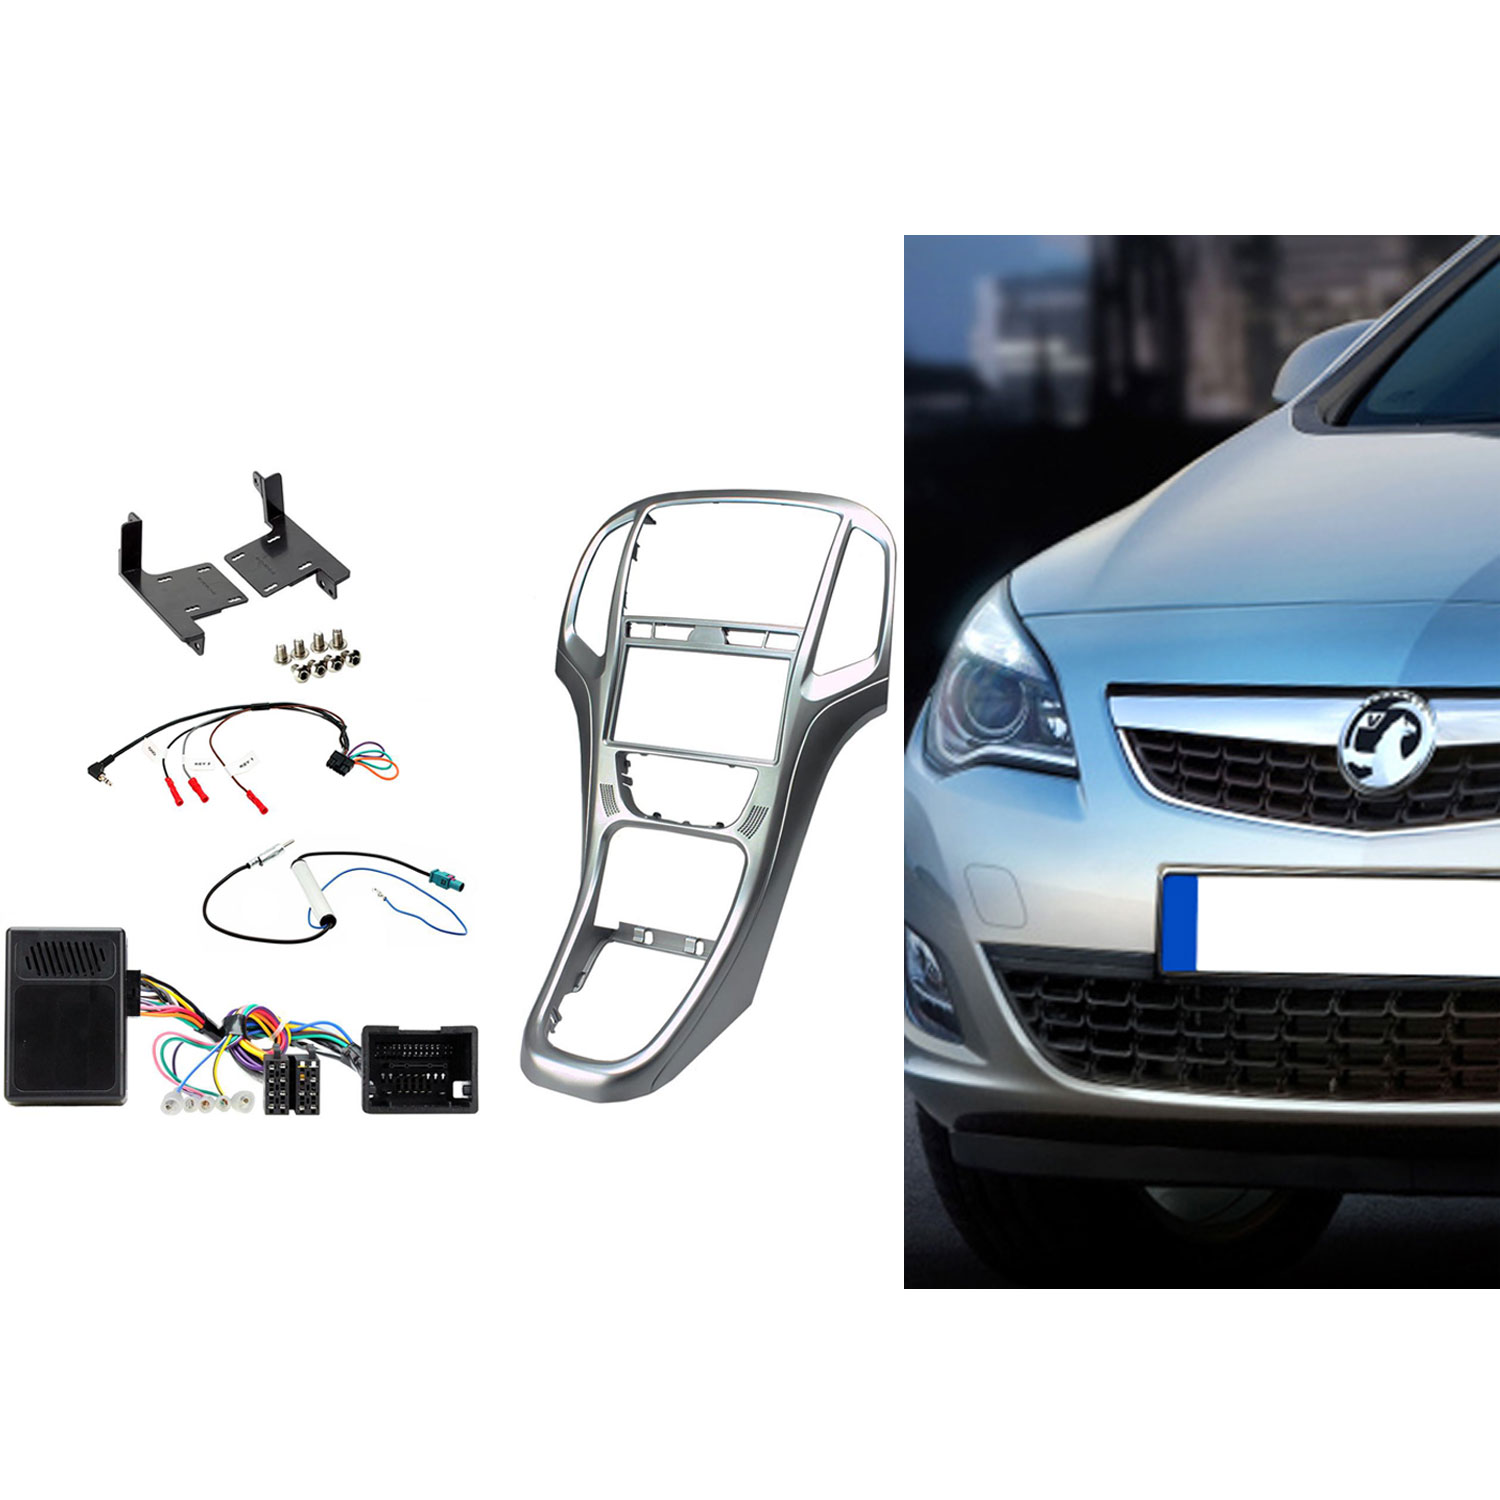 Vauxhall Astra (2013) Integration Kit: Part 1 